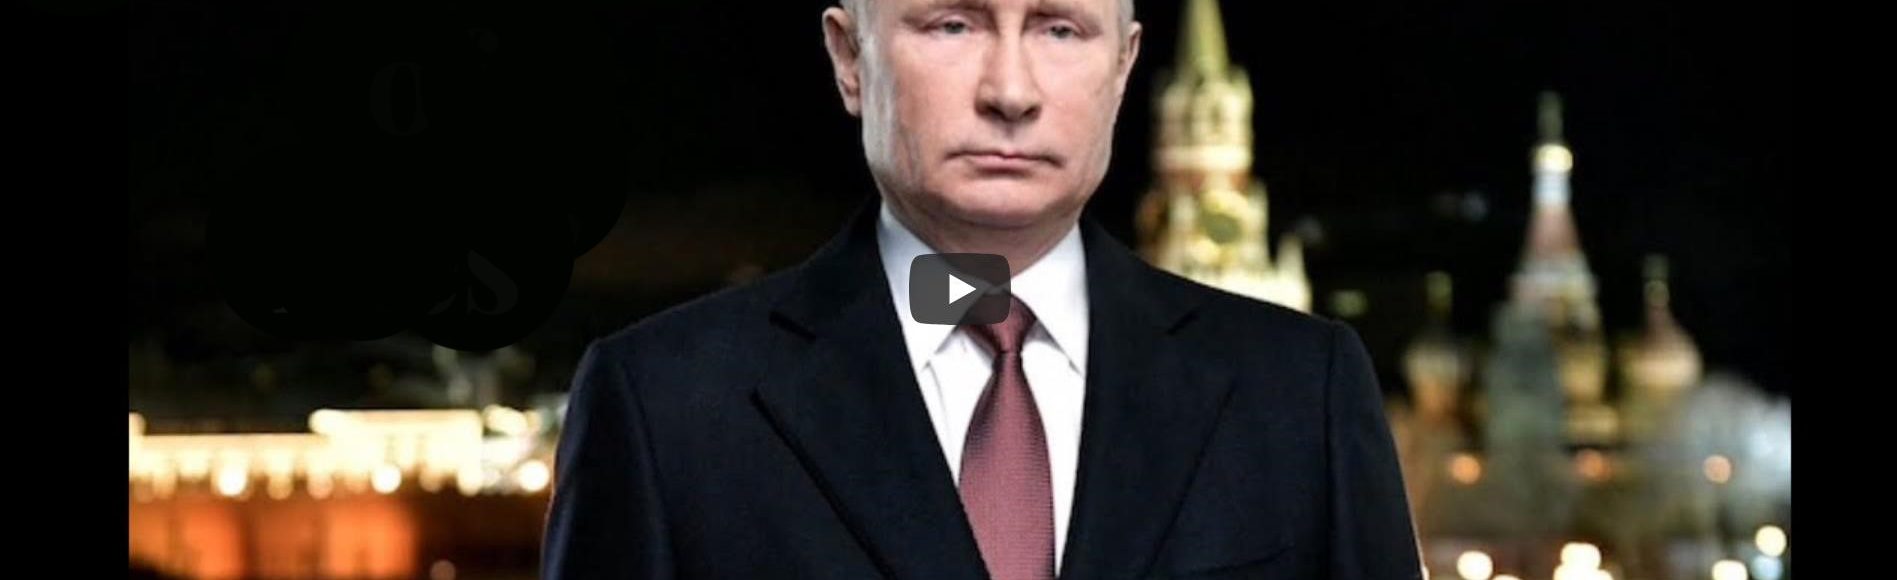 Putin’s Powerful Speech: Any questions?